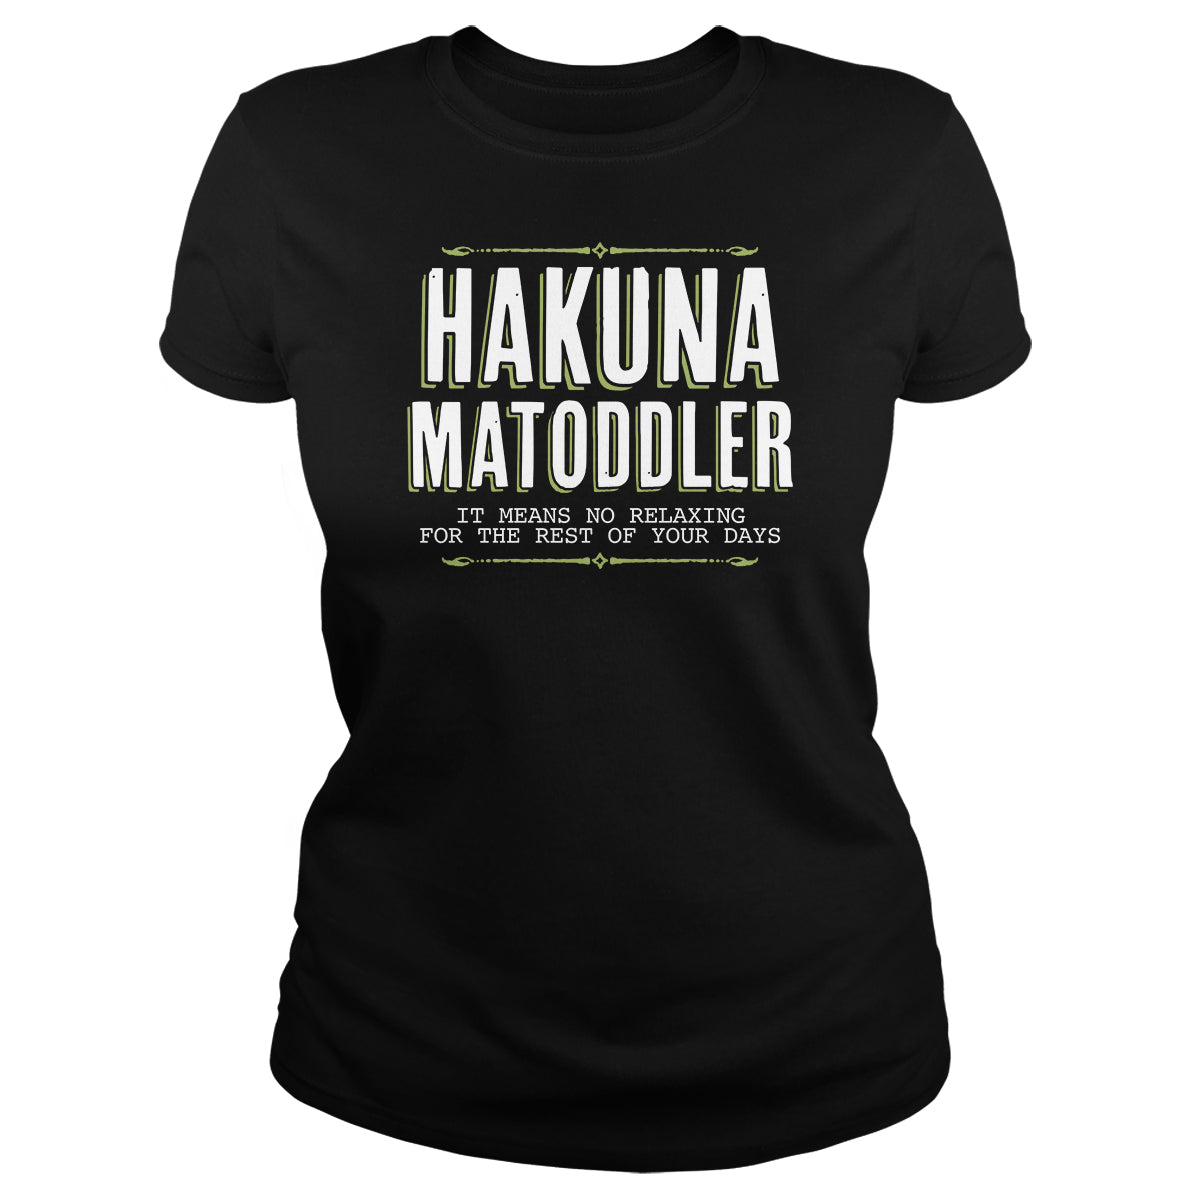 Hakuna Matoddler - BustedTees.com